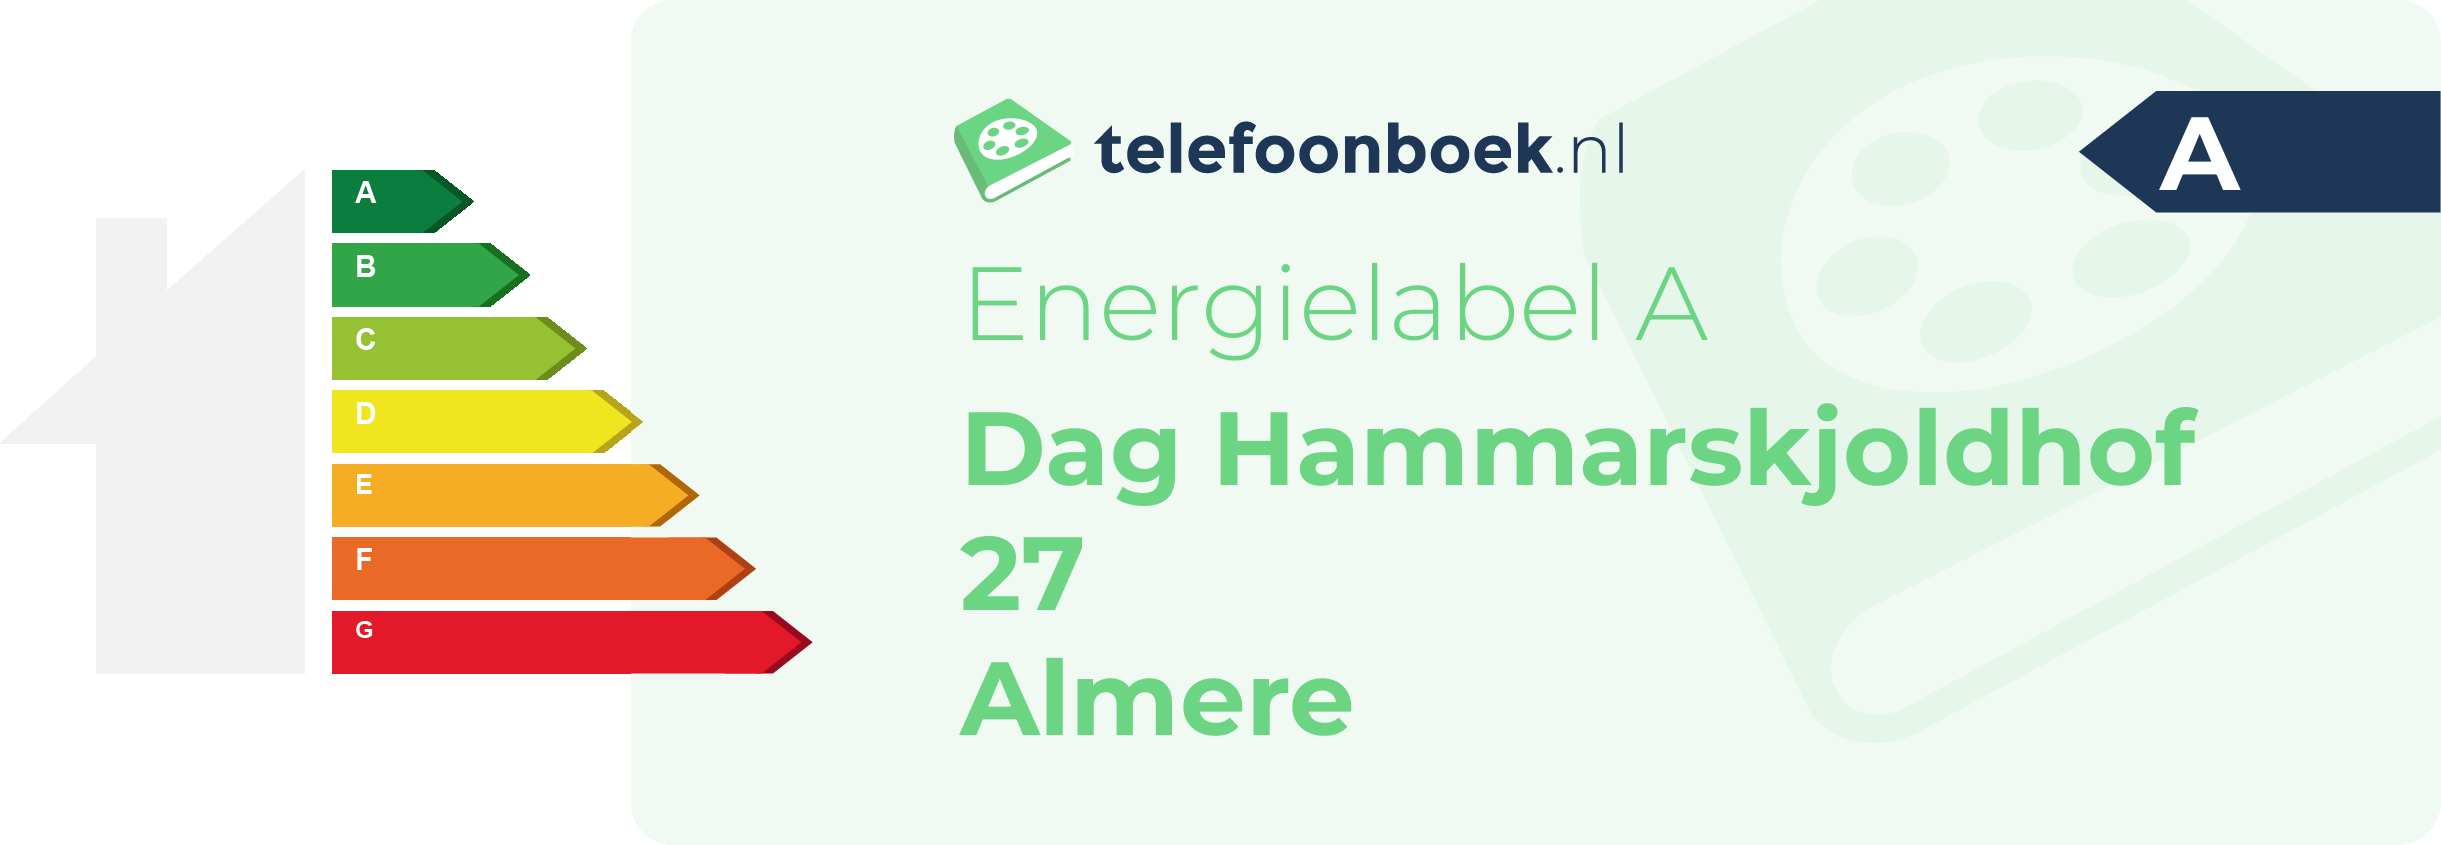 Energielabel Dag Hammarskjoldhof 27 Almere